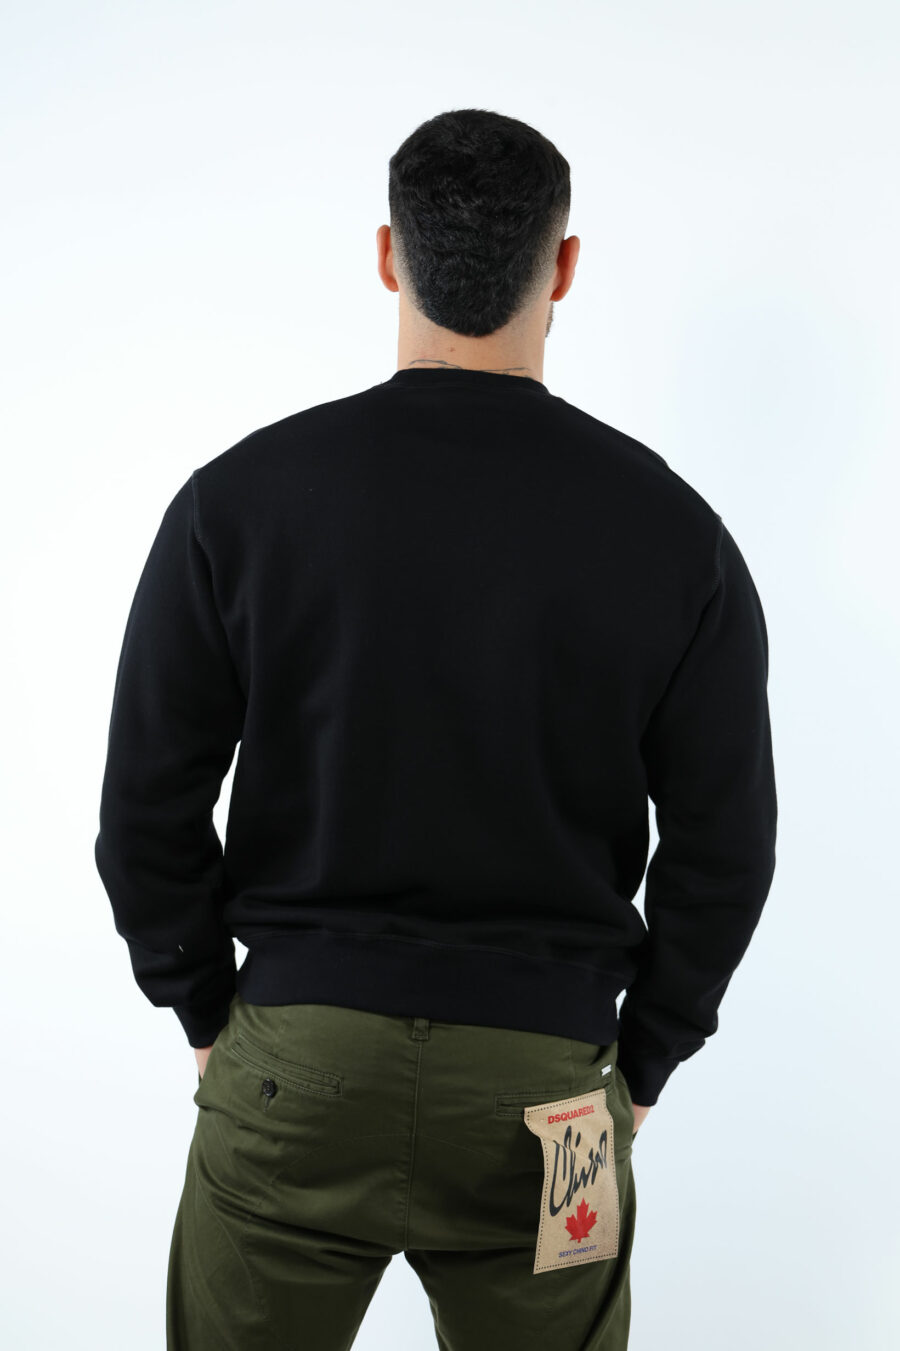 Black sweatshirt with "icon" maxilogo neon green blurred - 107064